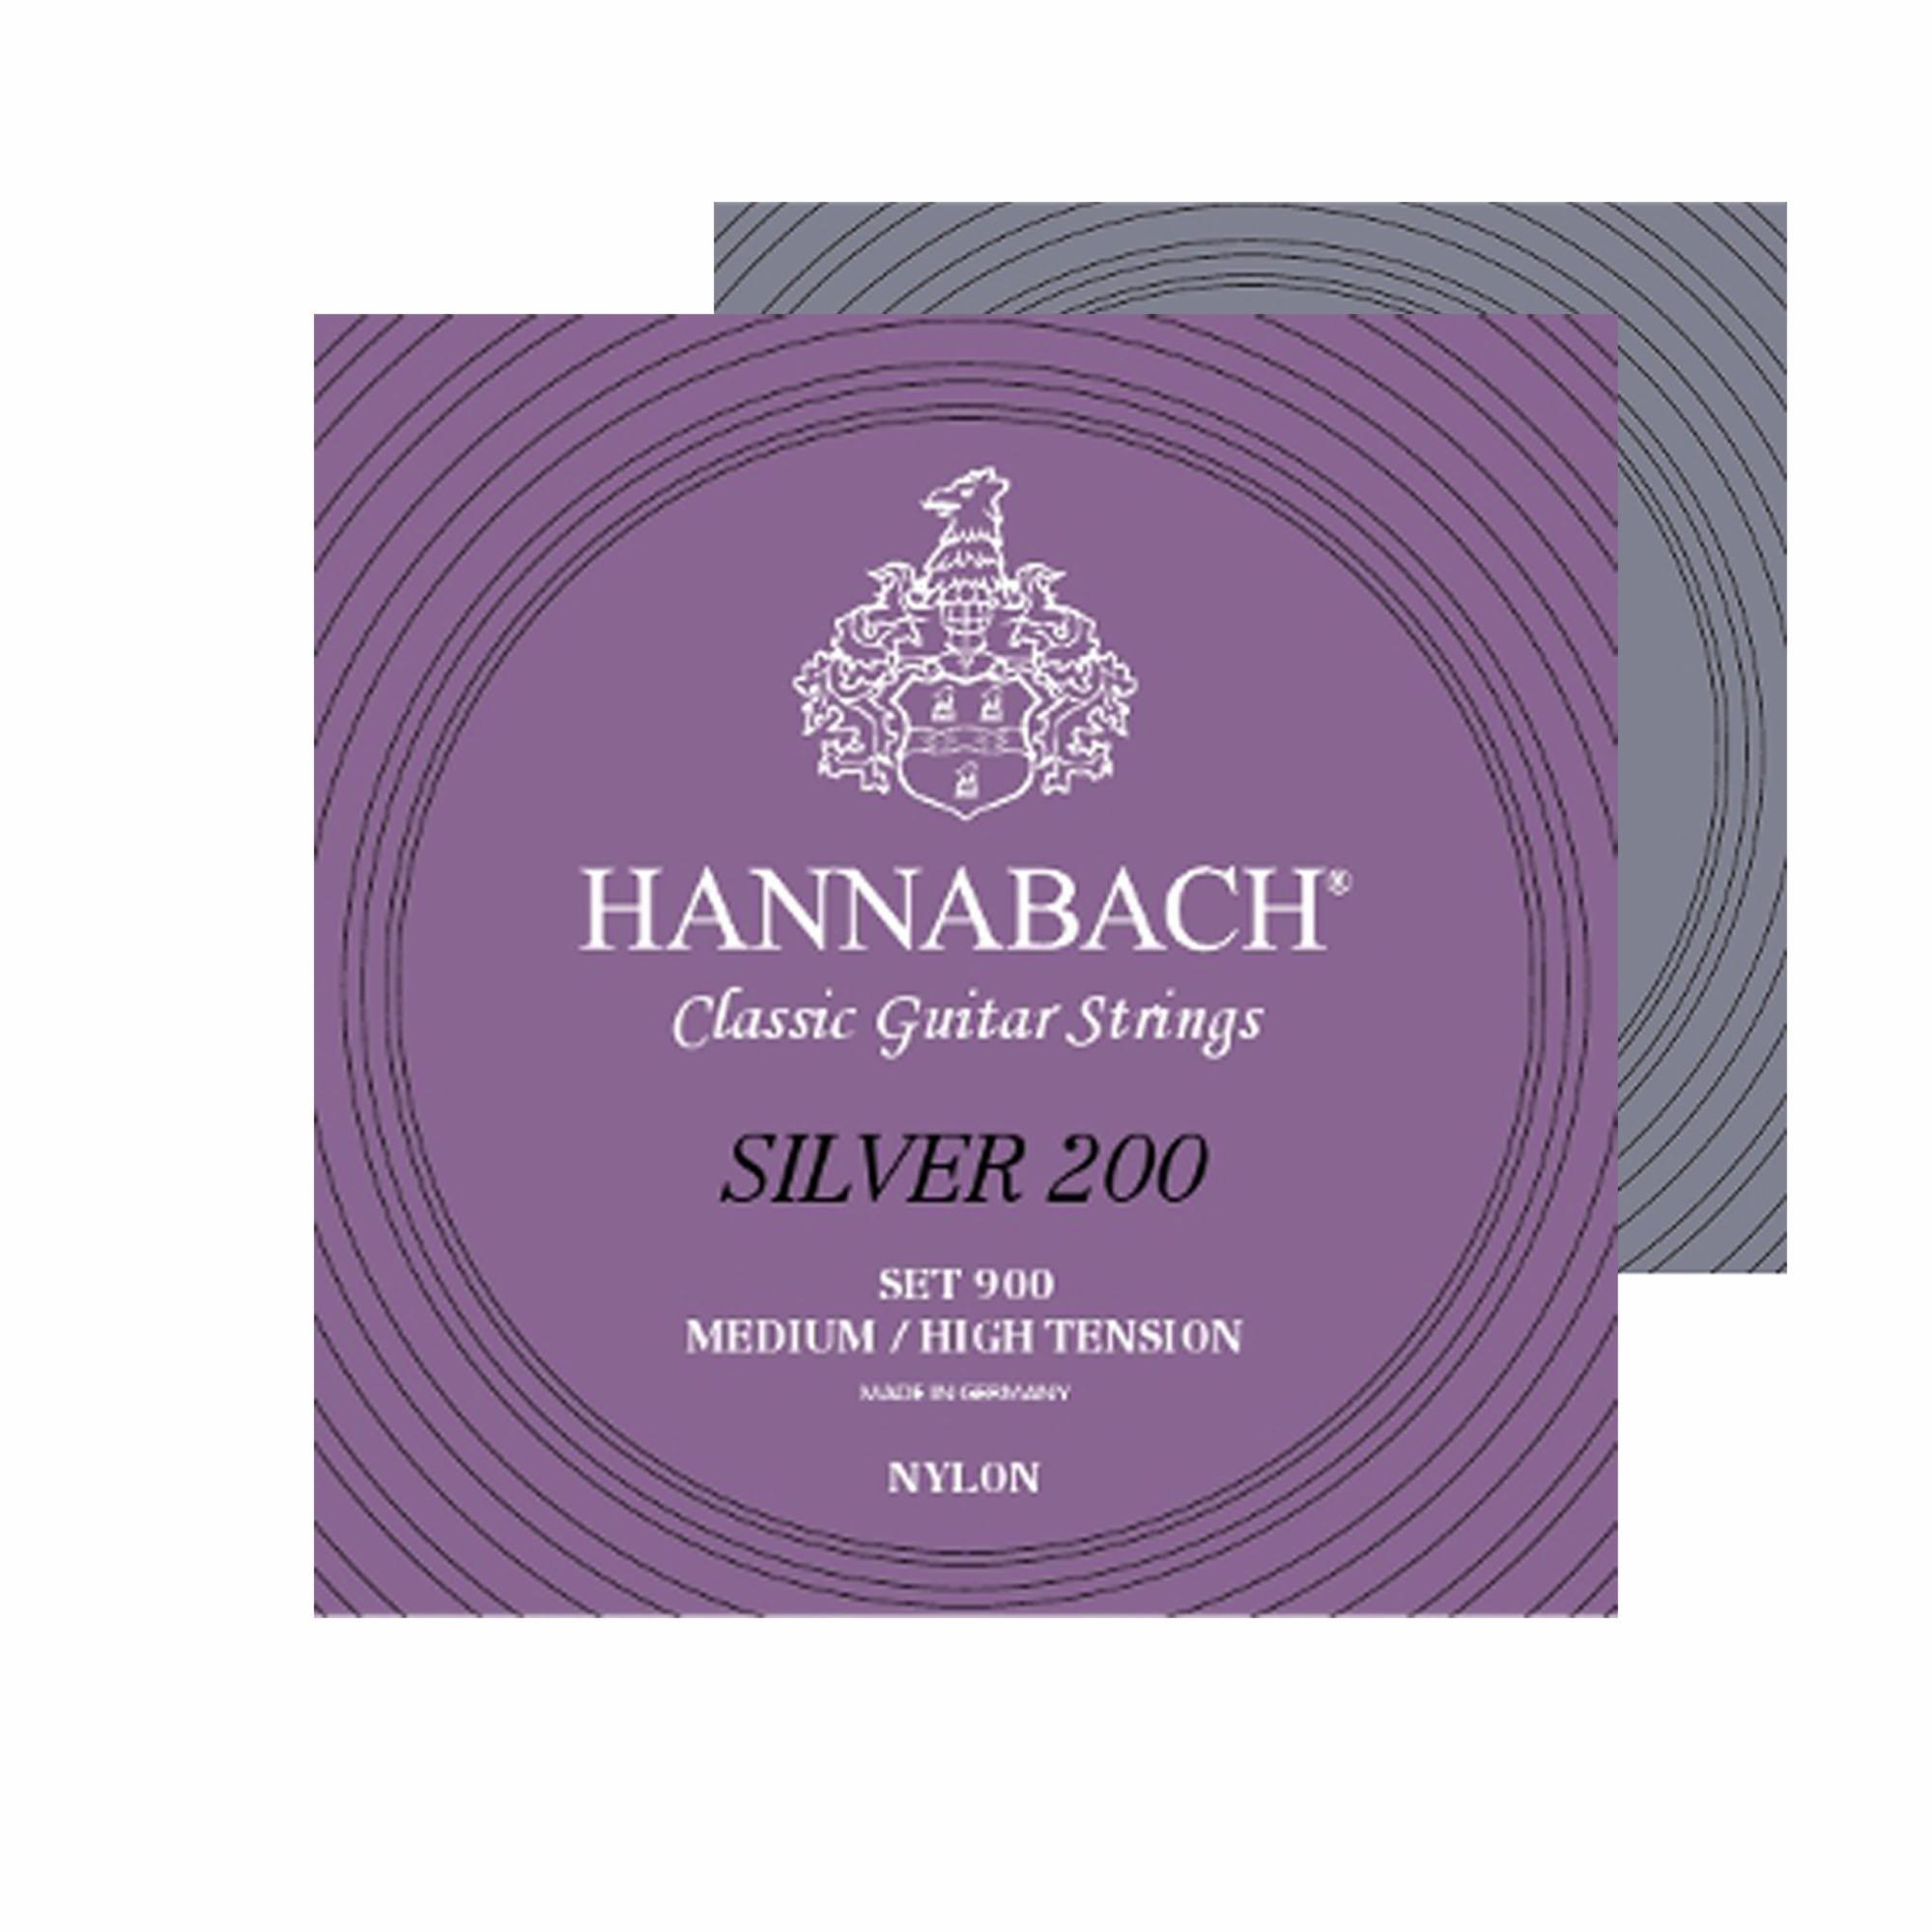 Hannabach 900 